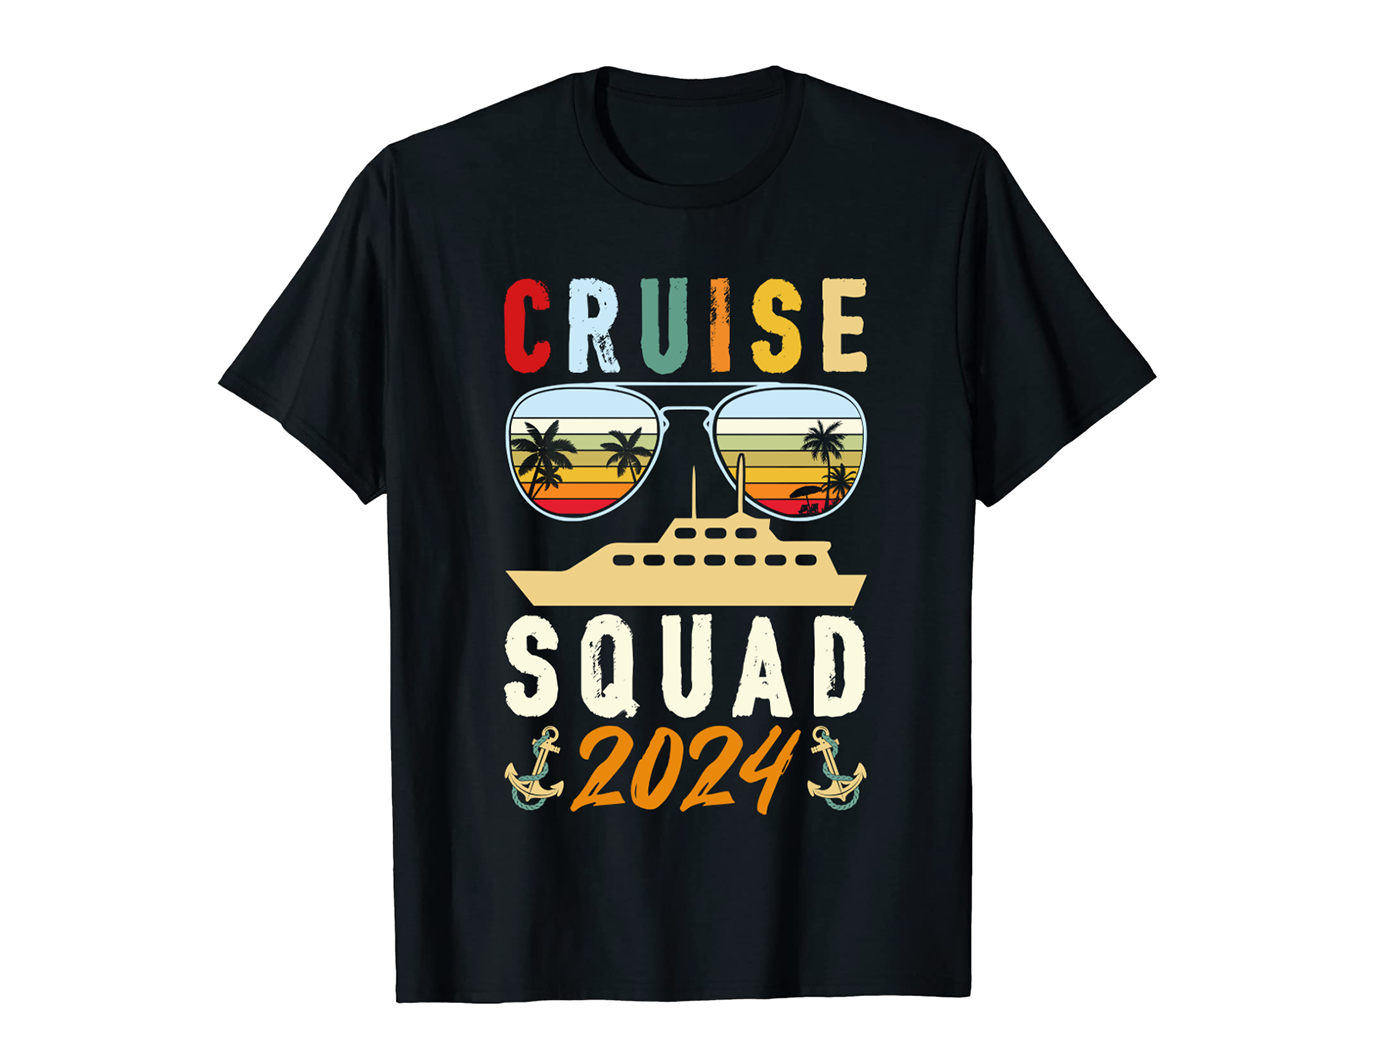 t-shirt Tshirt Design 𝖠𝖽𝗈𝖻𝖾 𝖨𝗅𝗅𝗎𝗌𝗍𝗋𝖺𝗍𝗈𝗋 design Custom typography   teespring merch by amazon custom tshirt design MarchByAmazon